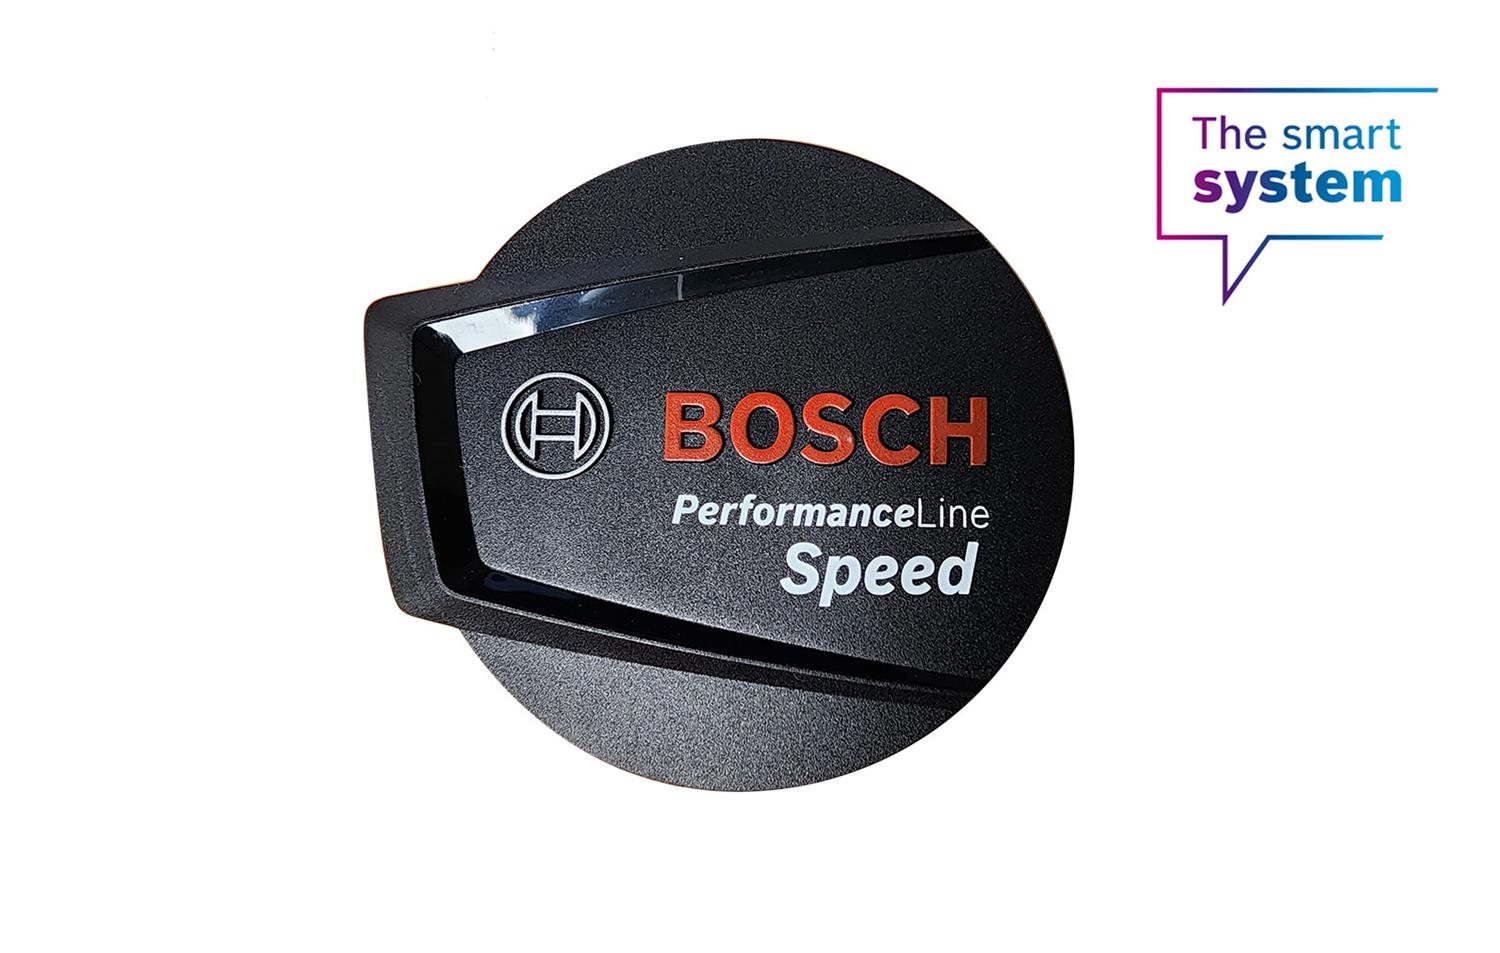 Bosch Motor Logo Covers